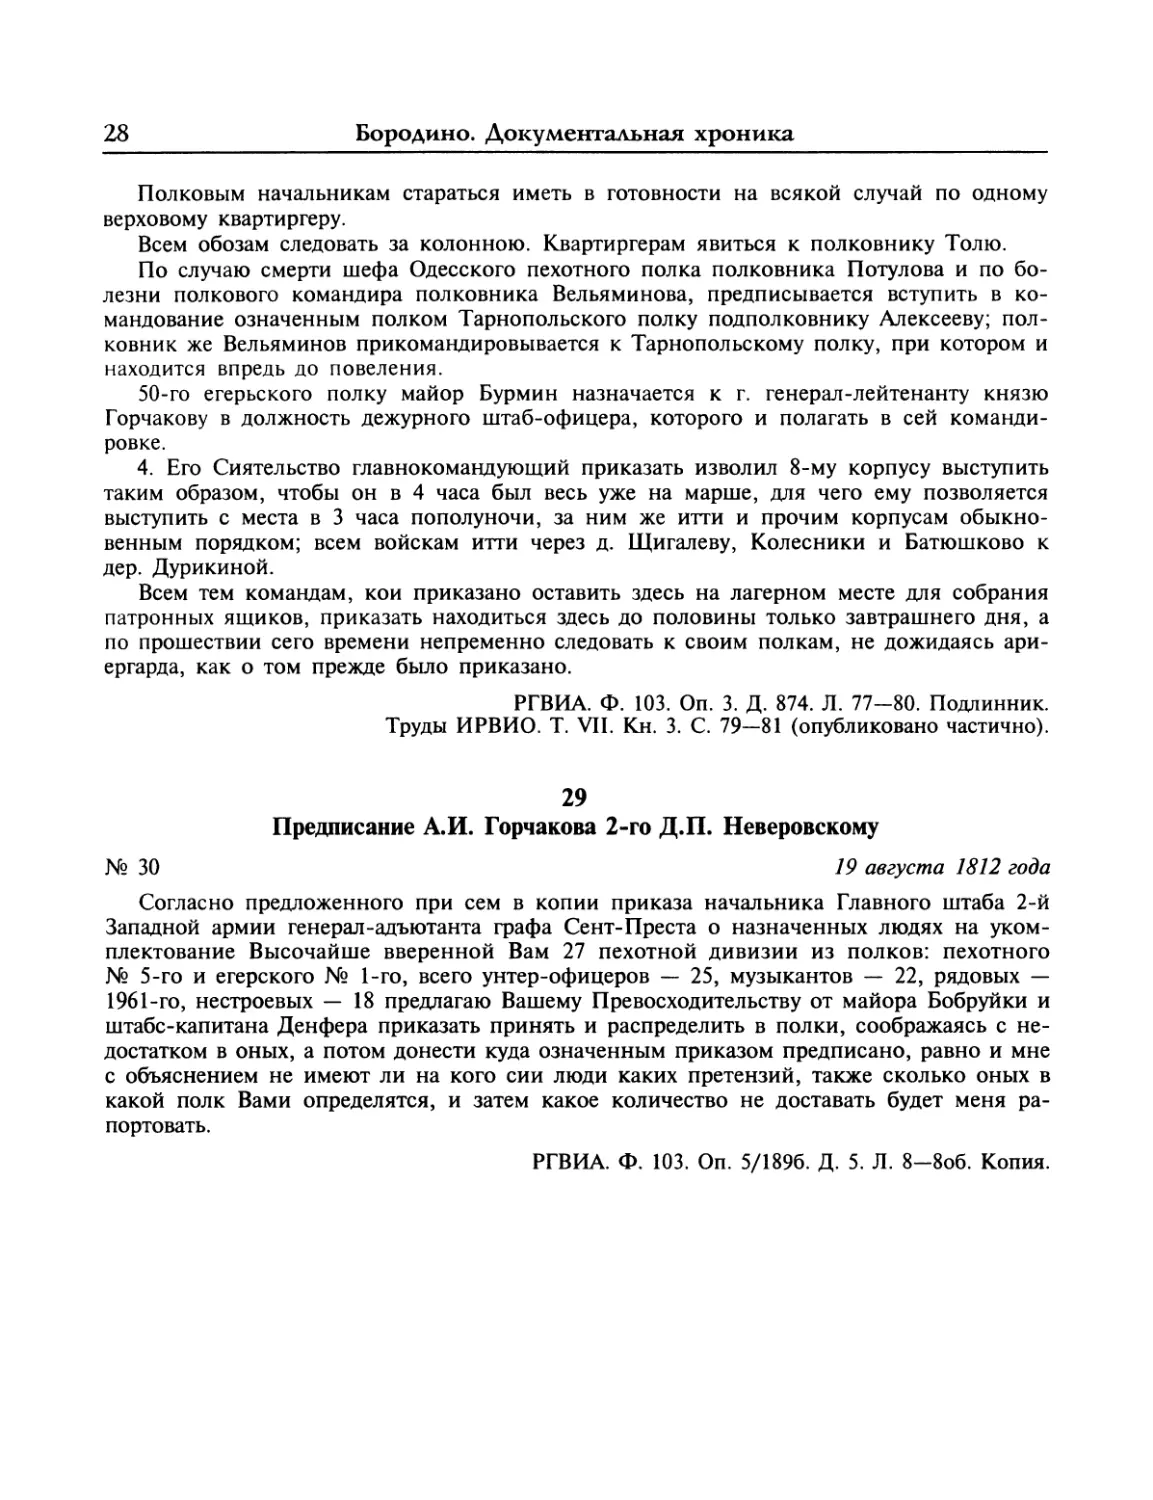 Предписание А.И.Горчакова 2-го Д.П.Неверовскому